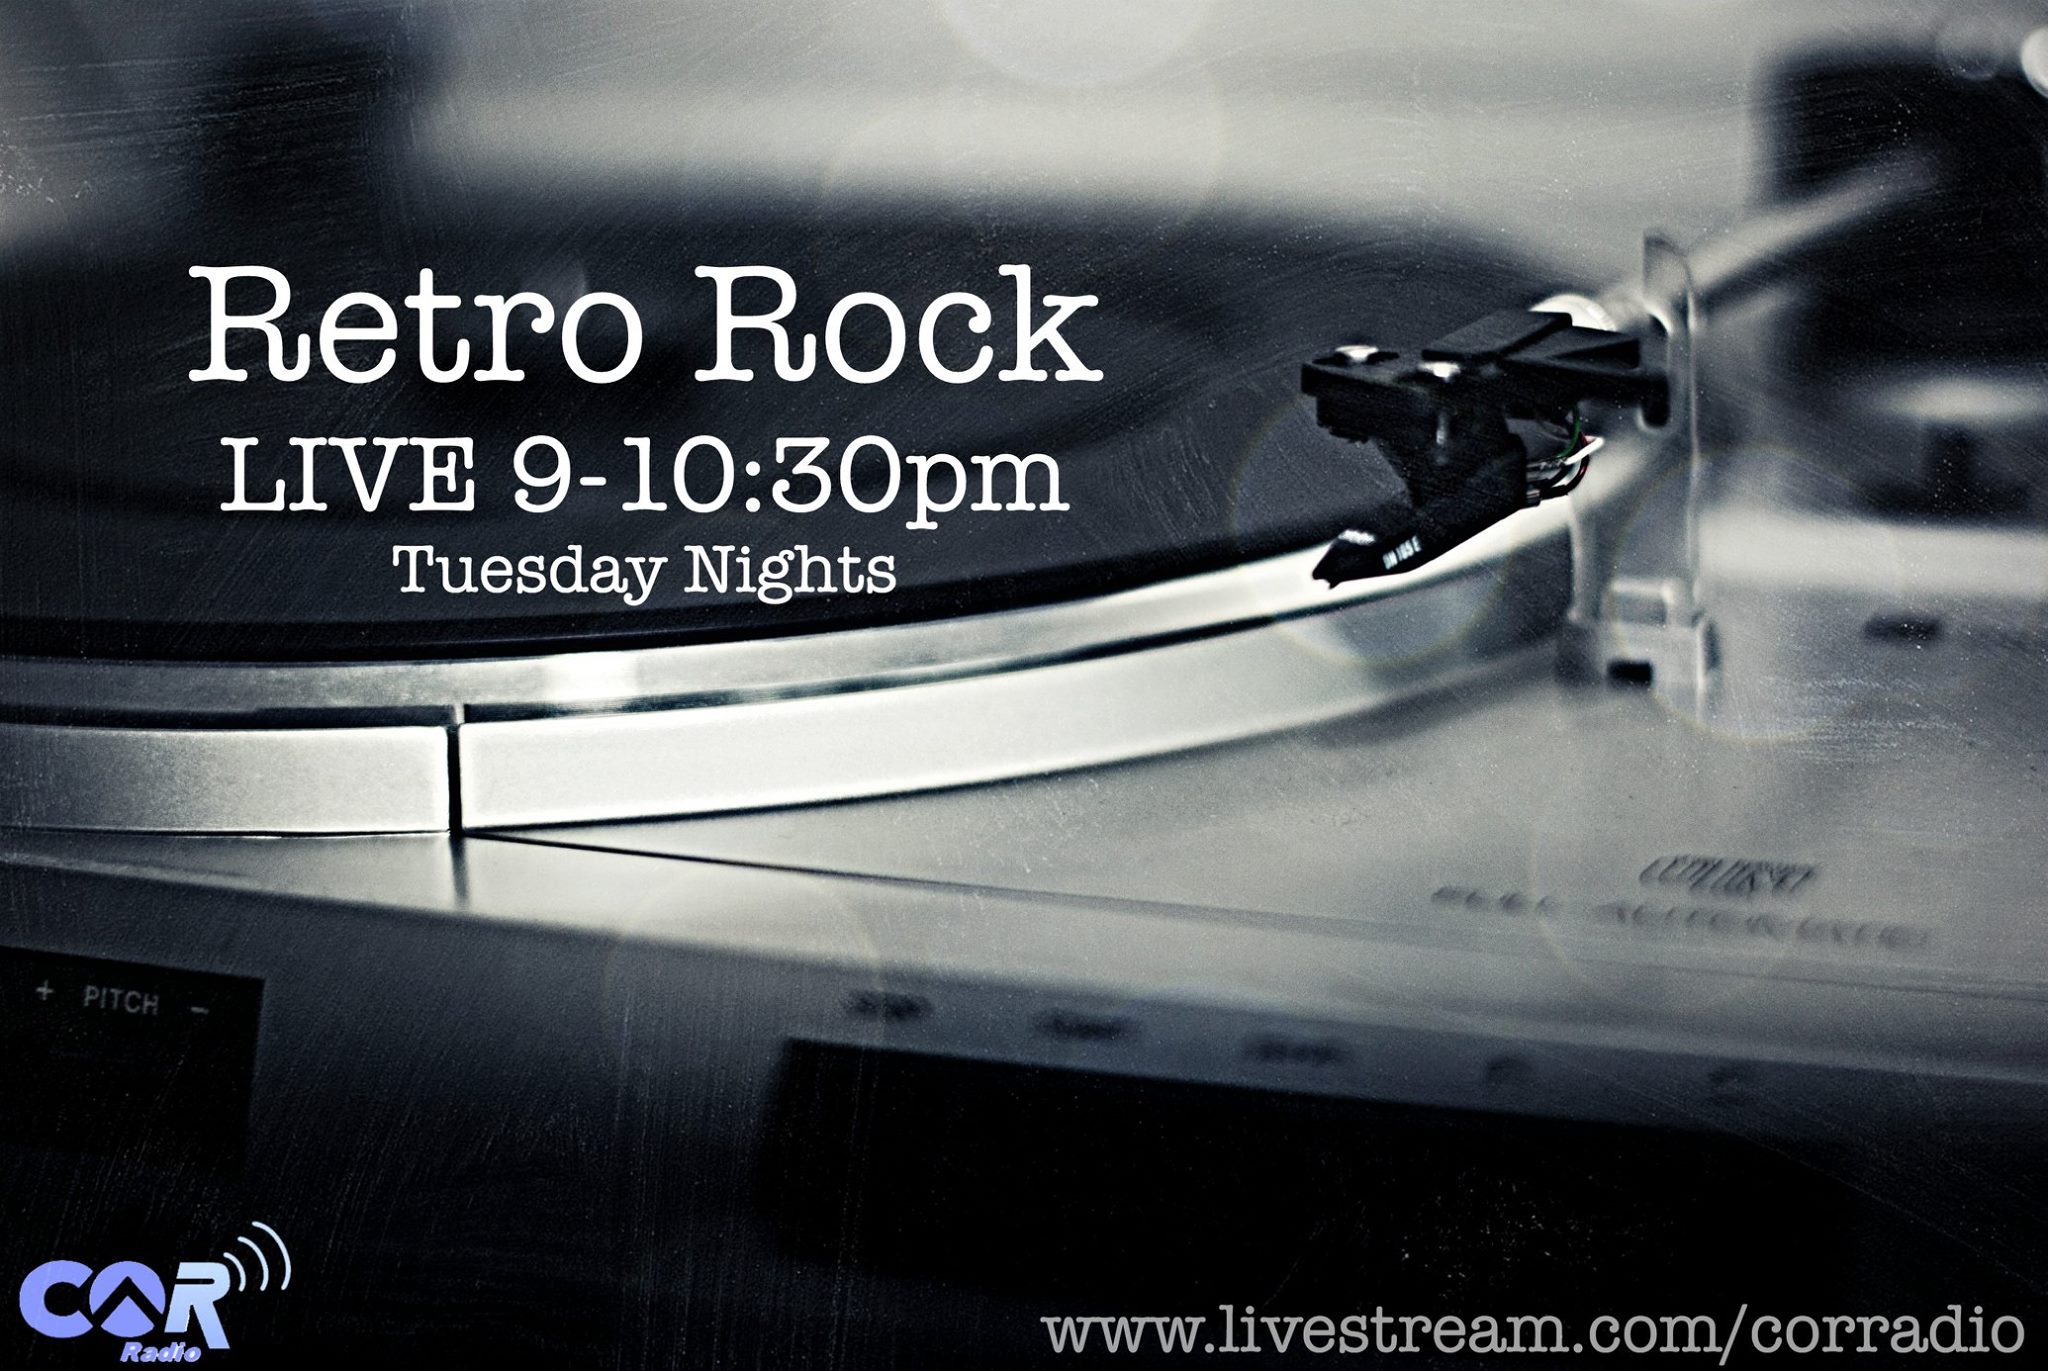 Retro Rock Live (Radio) on Livestream